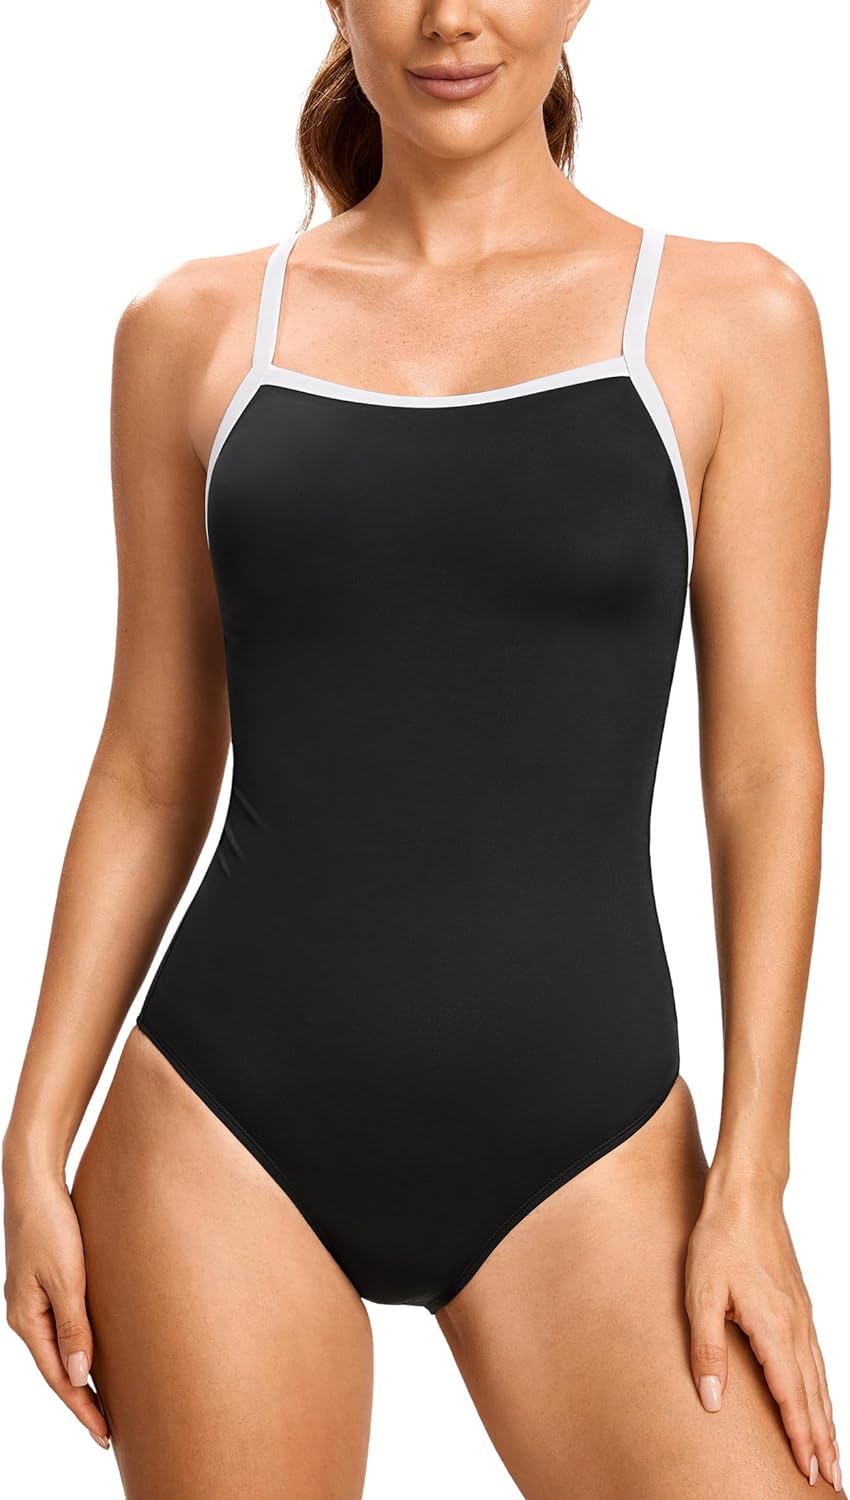 SYROKAN Women's One Piece Swimsuit Athletic Competitive Racerback Sport Swimwear Training Bathing Suit